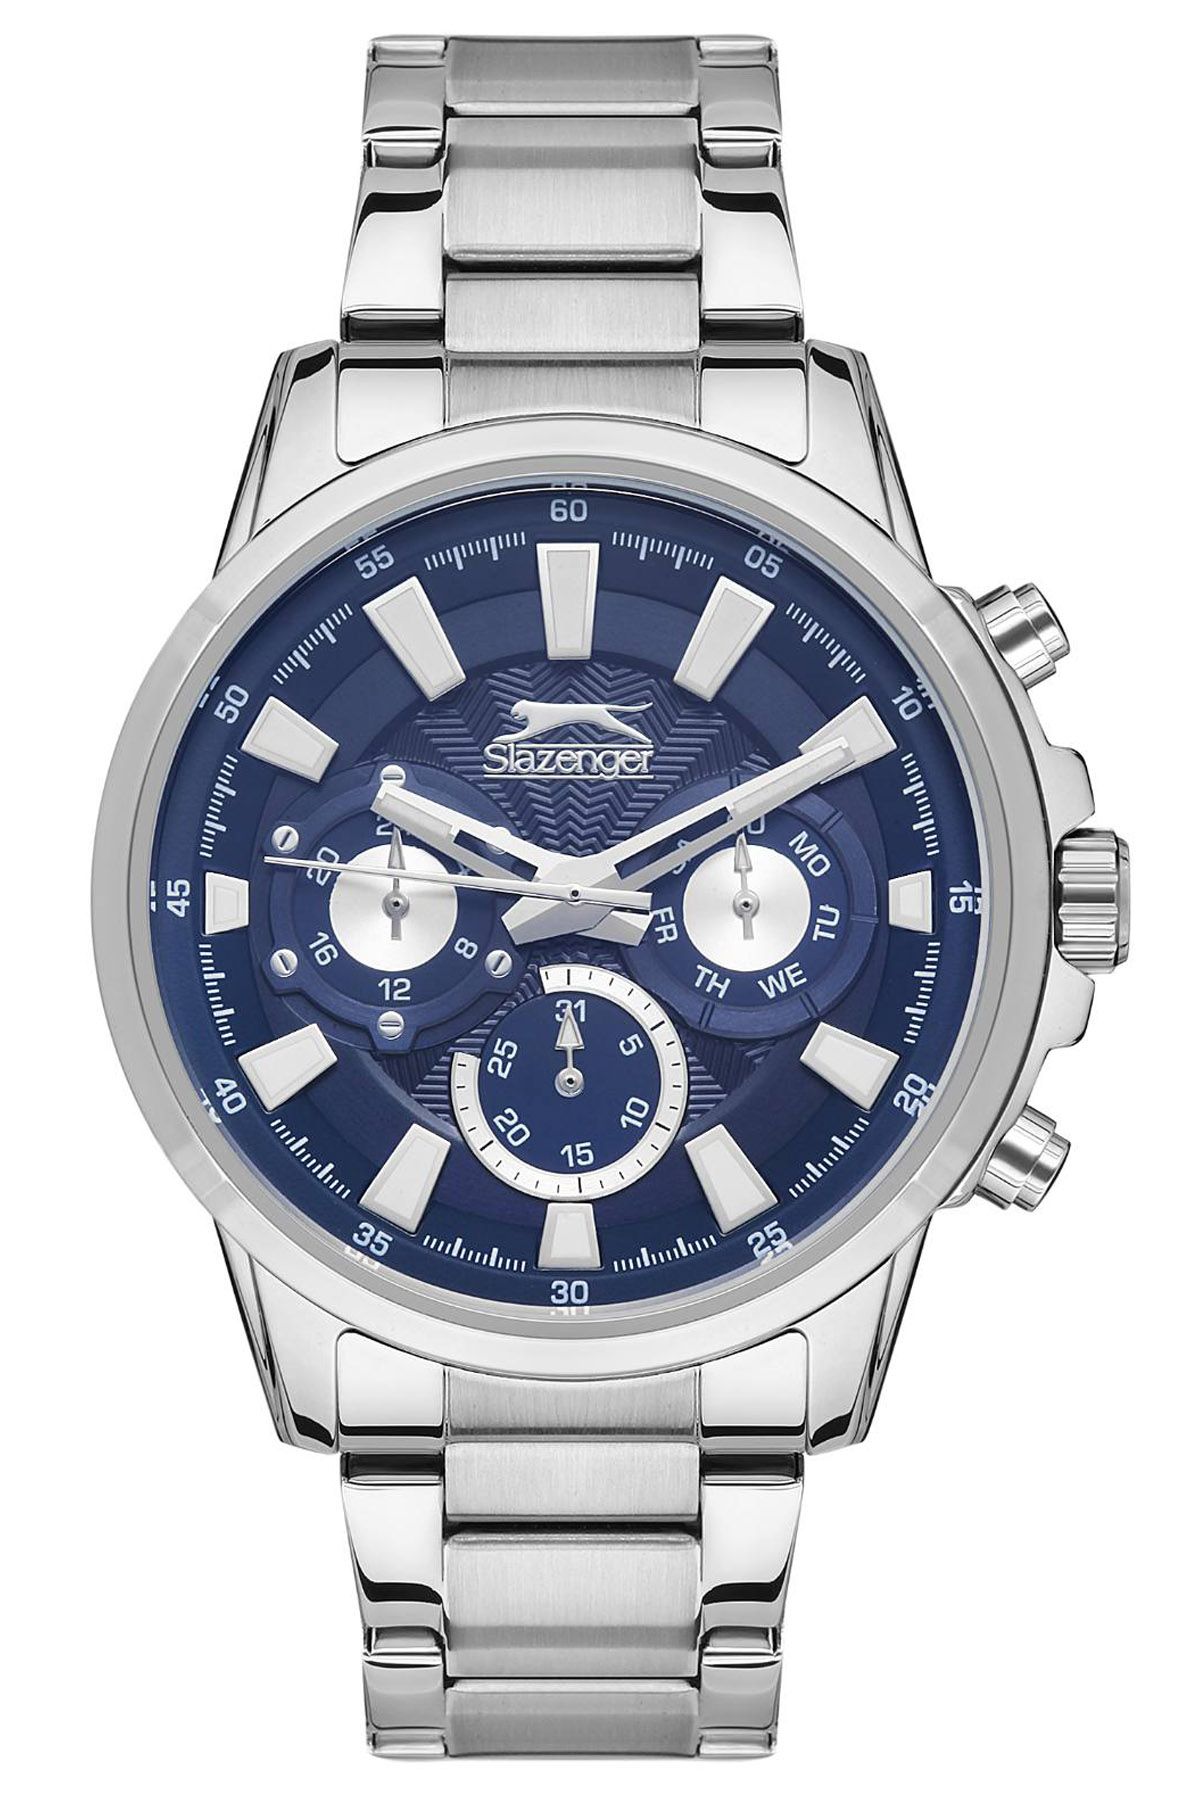 Slazenger watch SINCE 1881 United Kingdom Quartz watches men luxury brand  Watch Japanese Time Module Movement SL.9.1106.2.01 - AliExpress